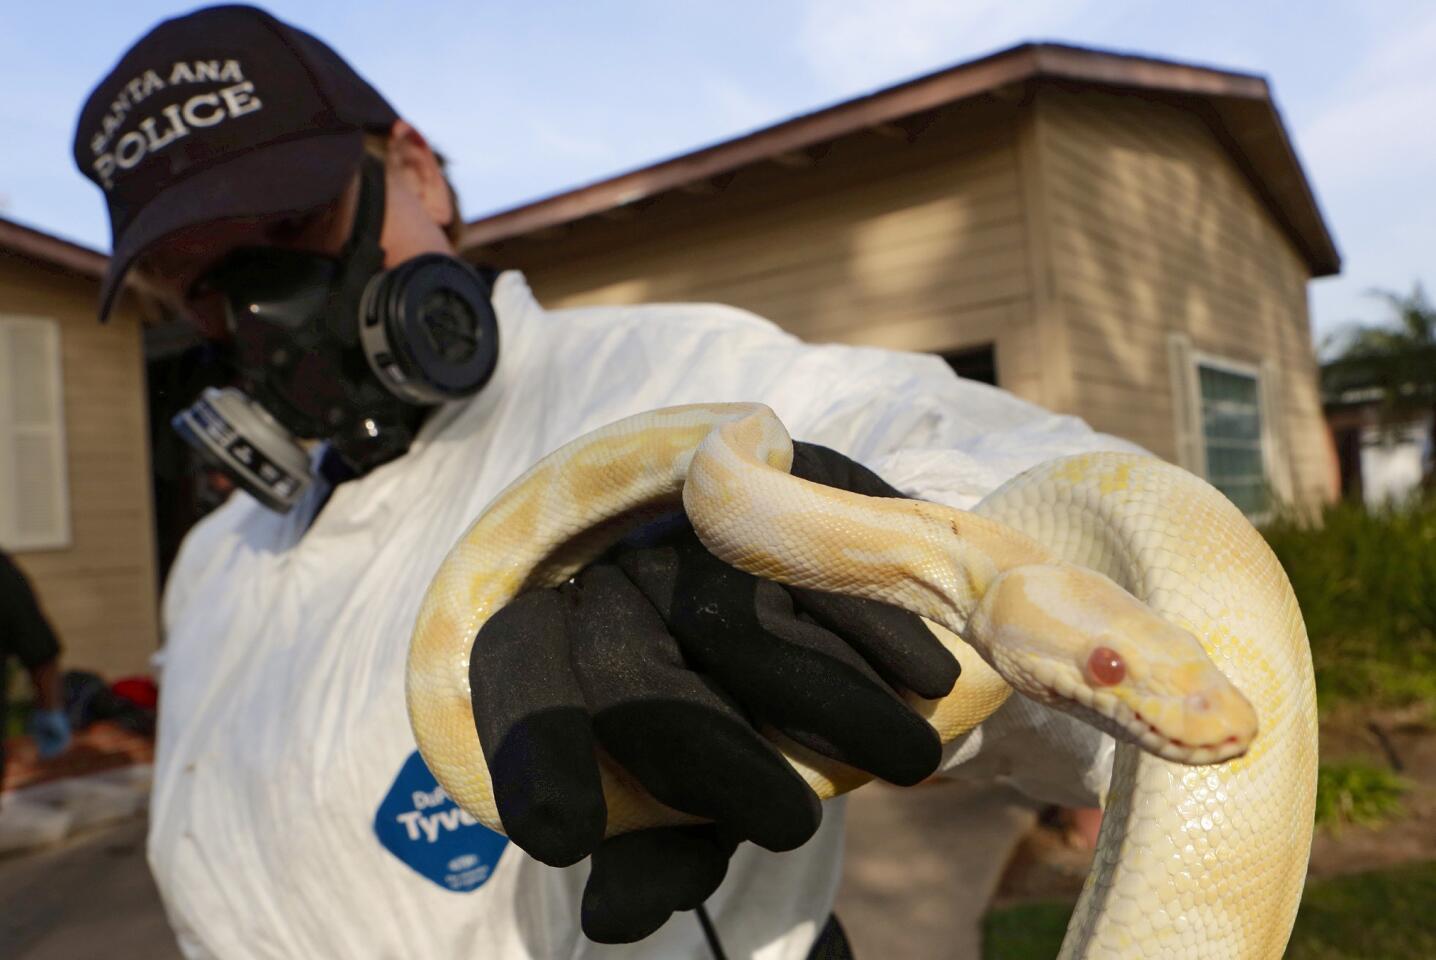 Santa Ana Police Animal Services supervisor Sondra Berg holds one of the living pythons found inside a Santa Ana home.